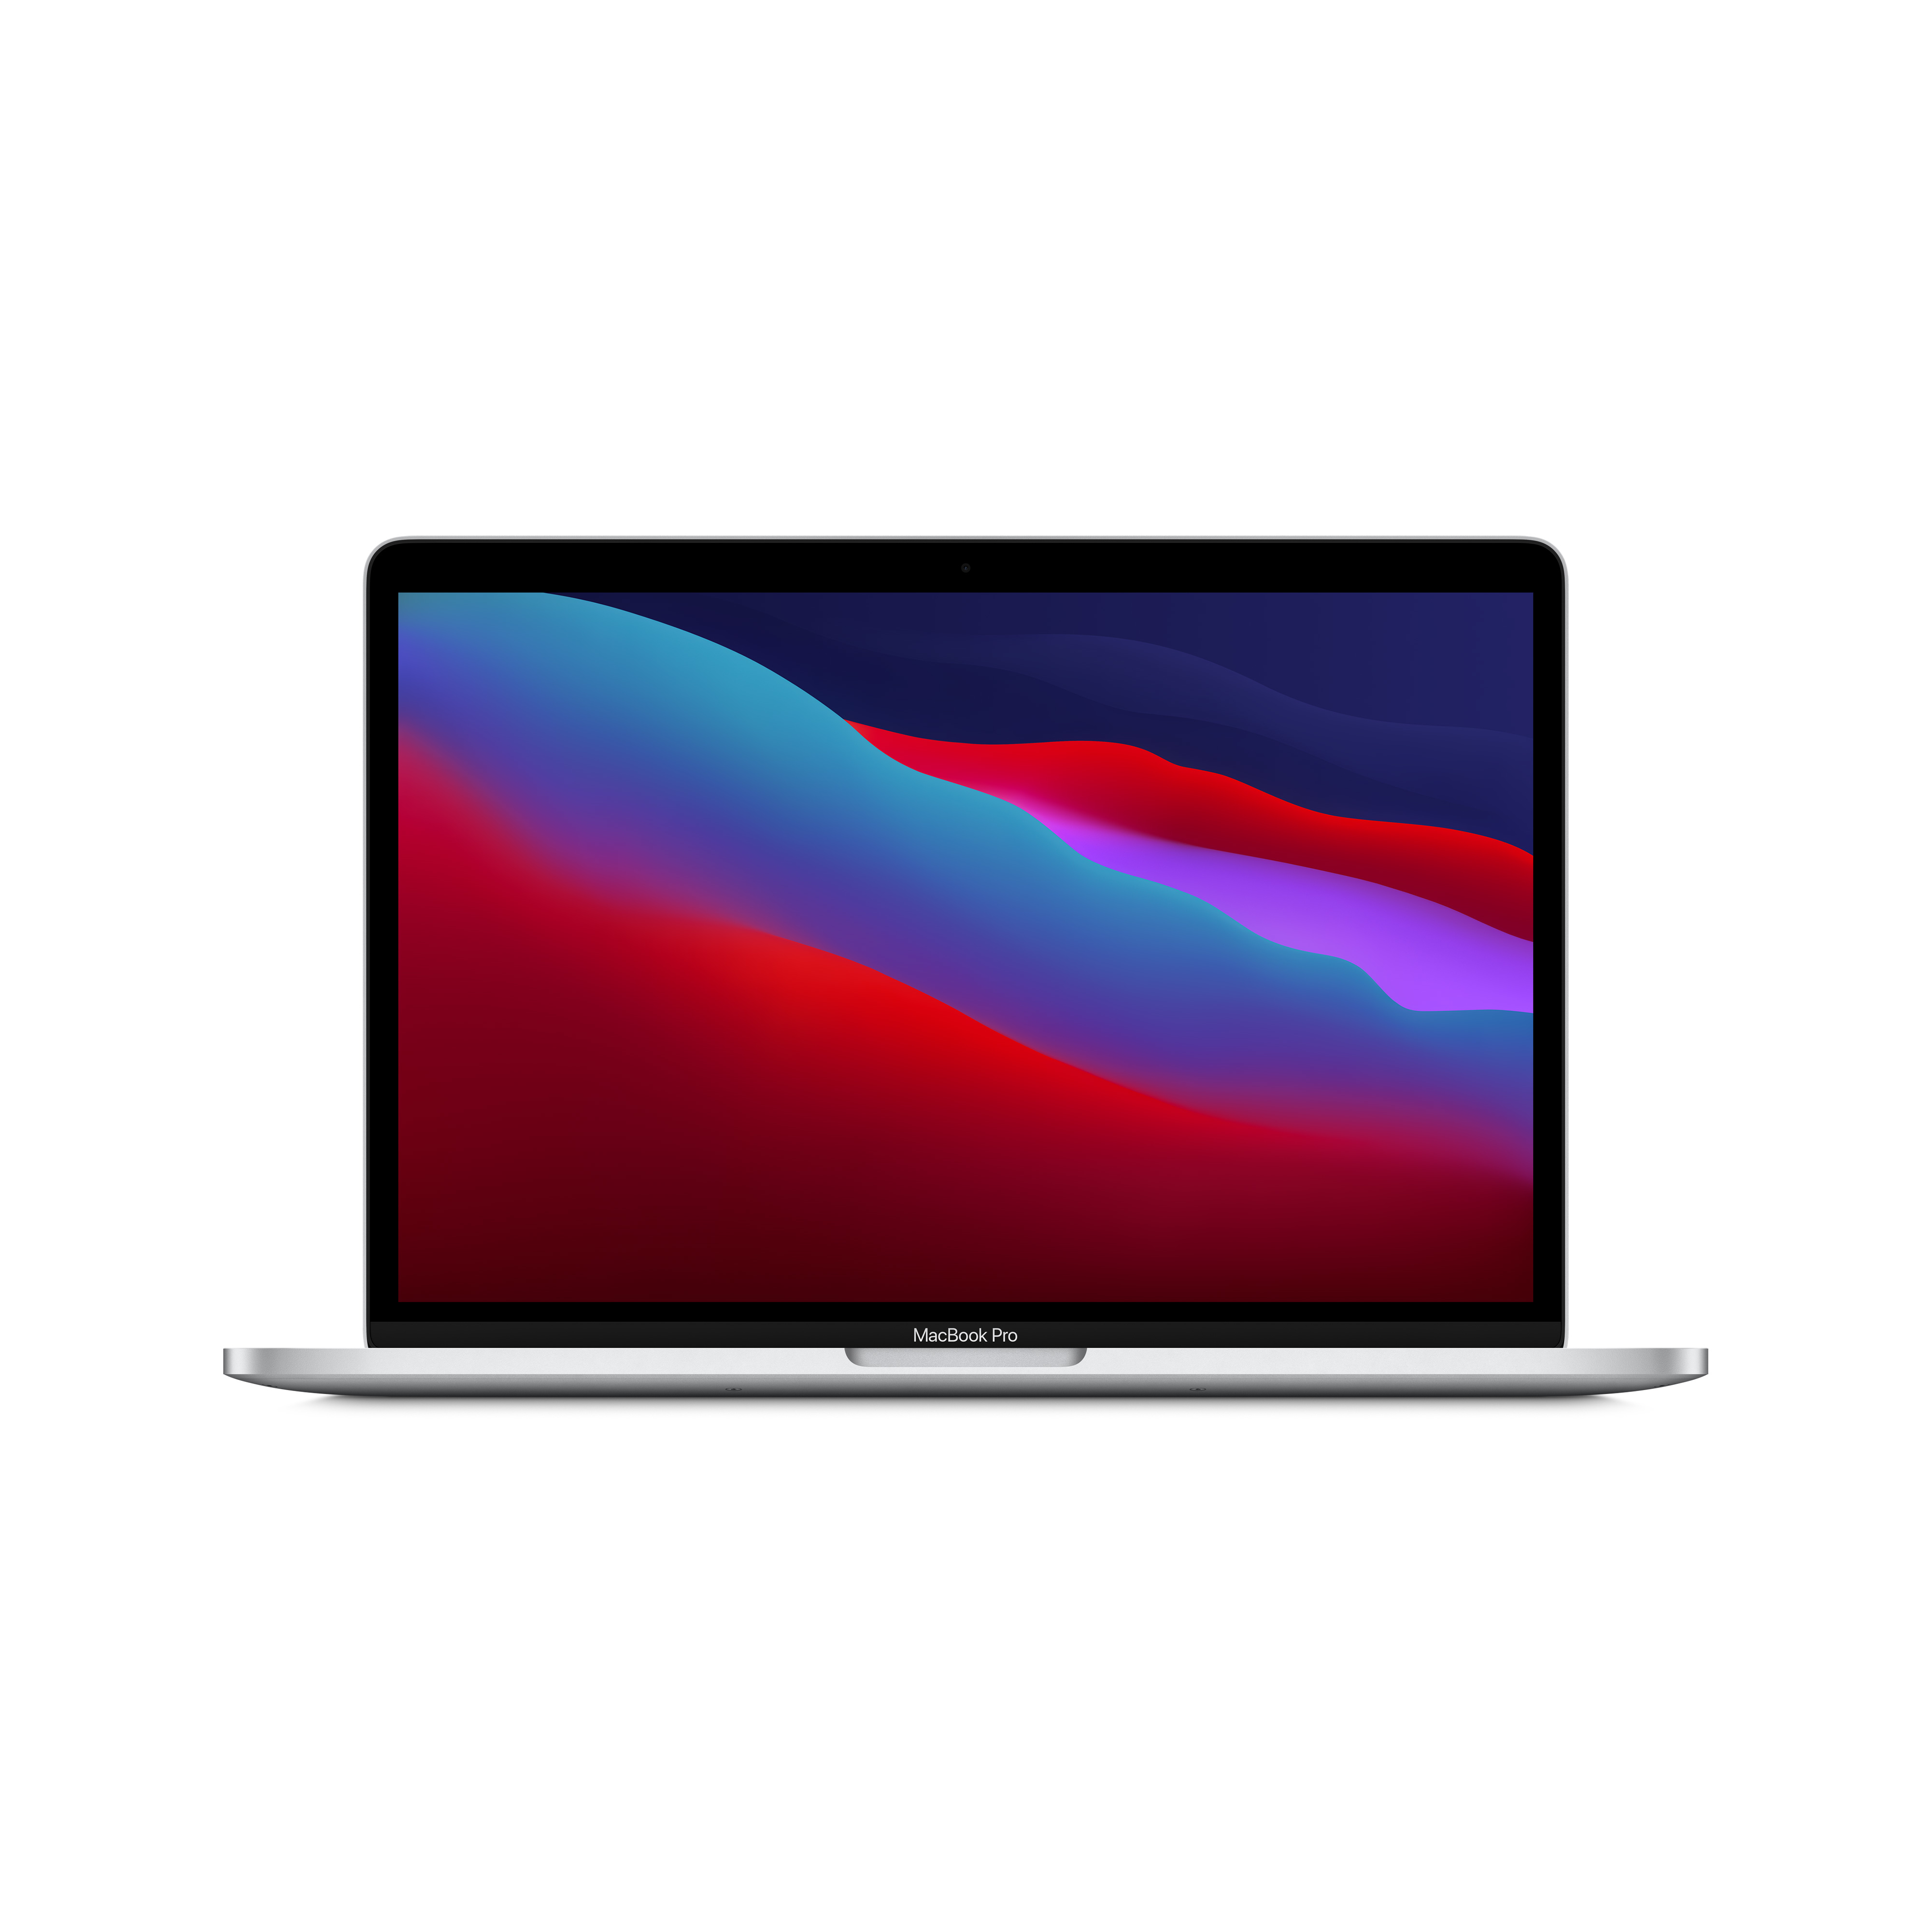 Mand advies voetstappen Apple MacBook Pro 13" 2020 M1 8GB RAM 256GB SSD (MYDA2FN/A) kopen »  Centralpoint